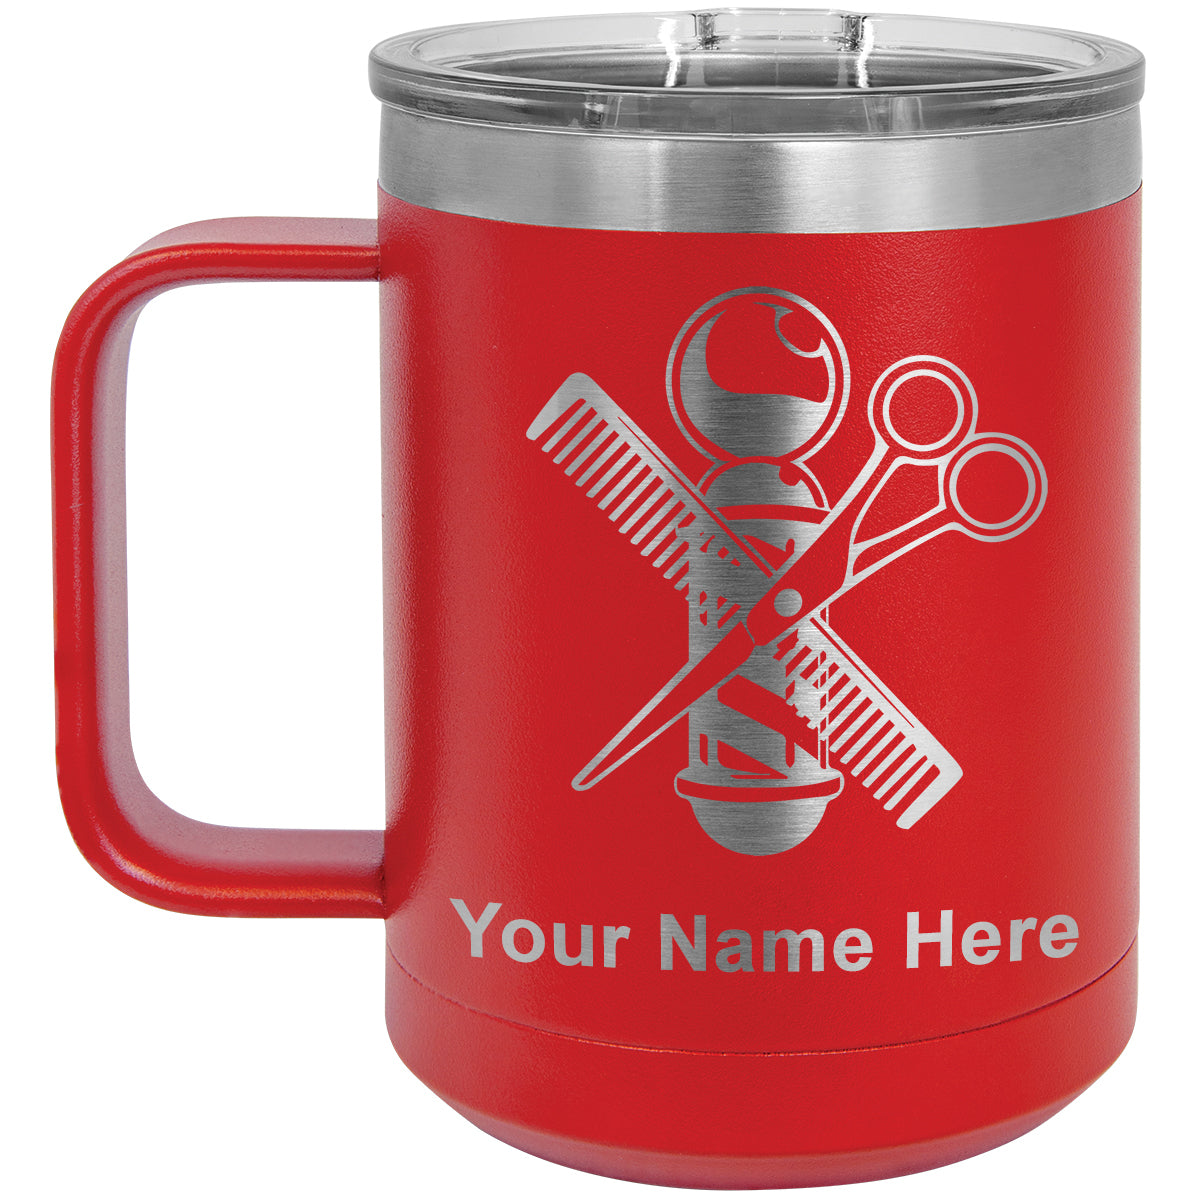 Personalized Coffee Mug, Custom Coffee Mug With Handle, Insulated